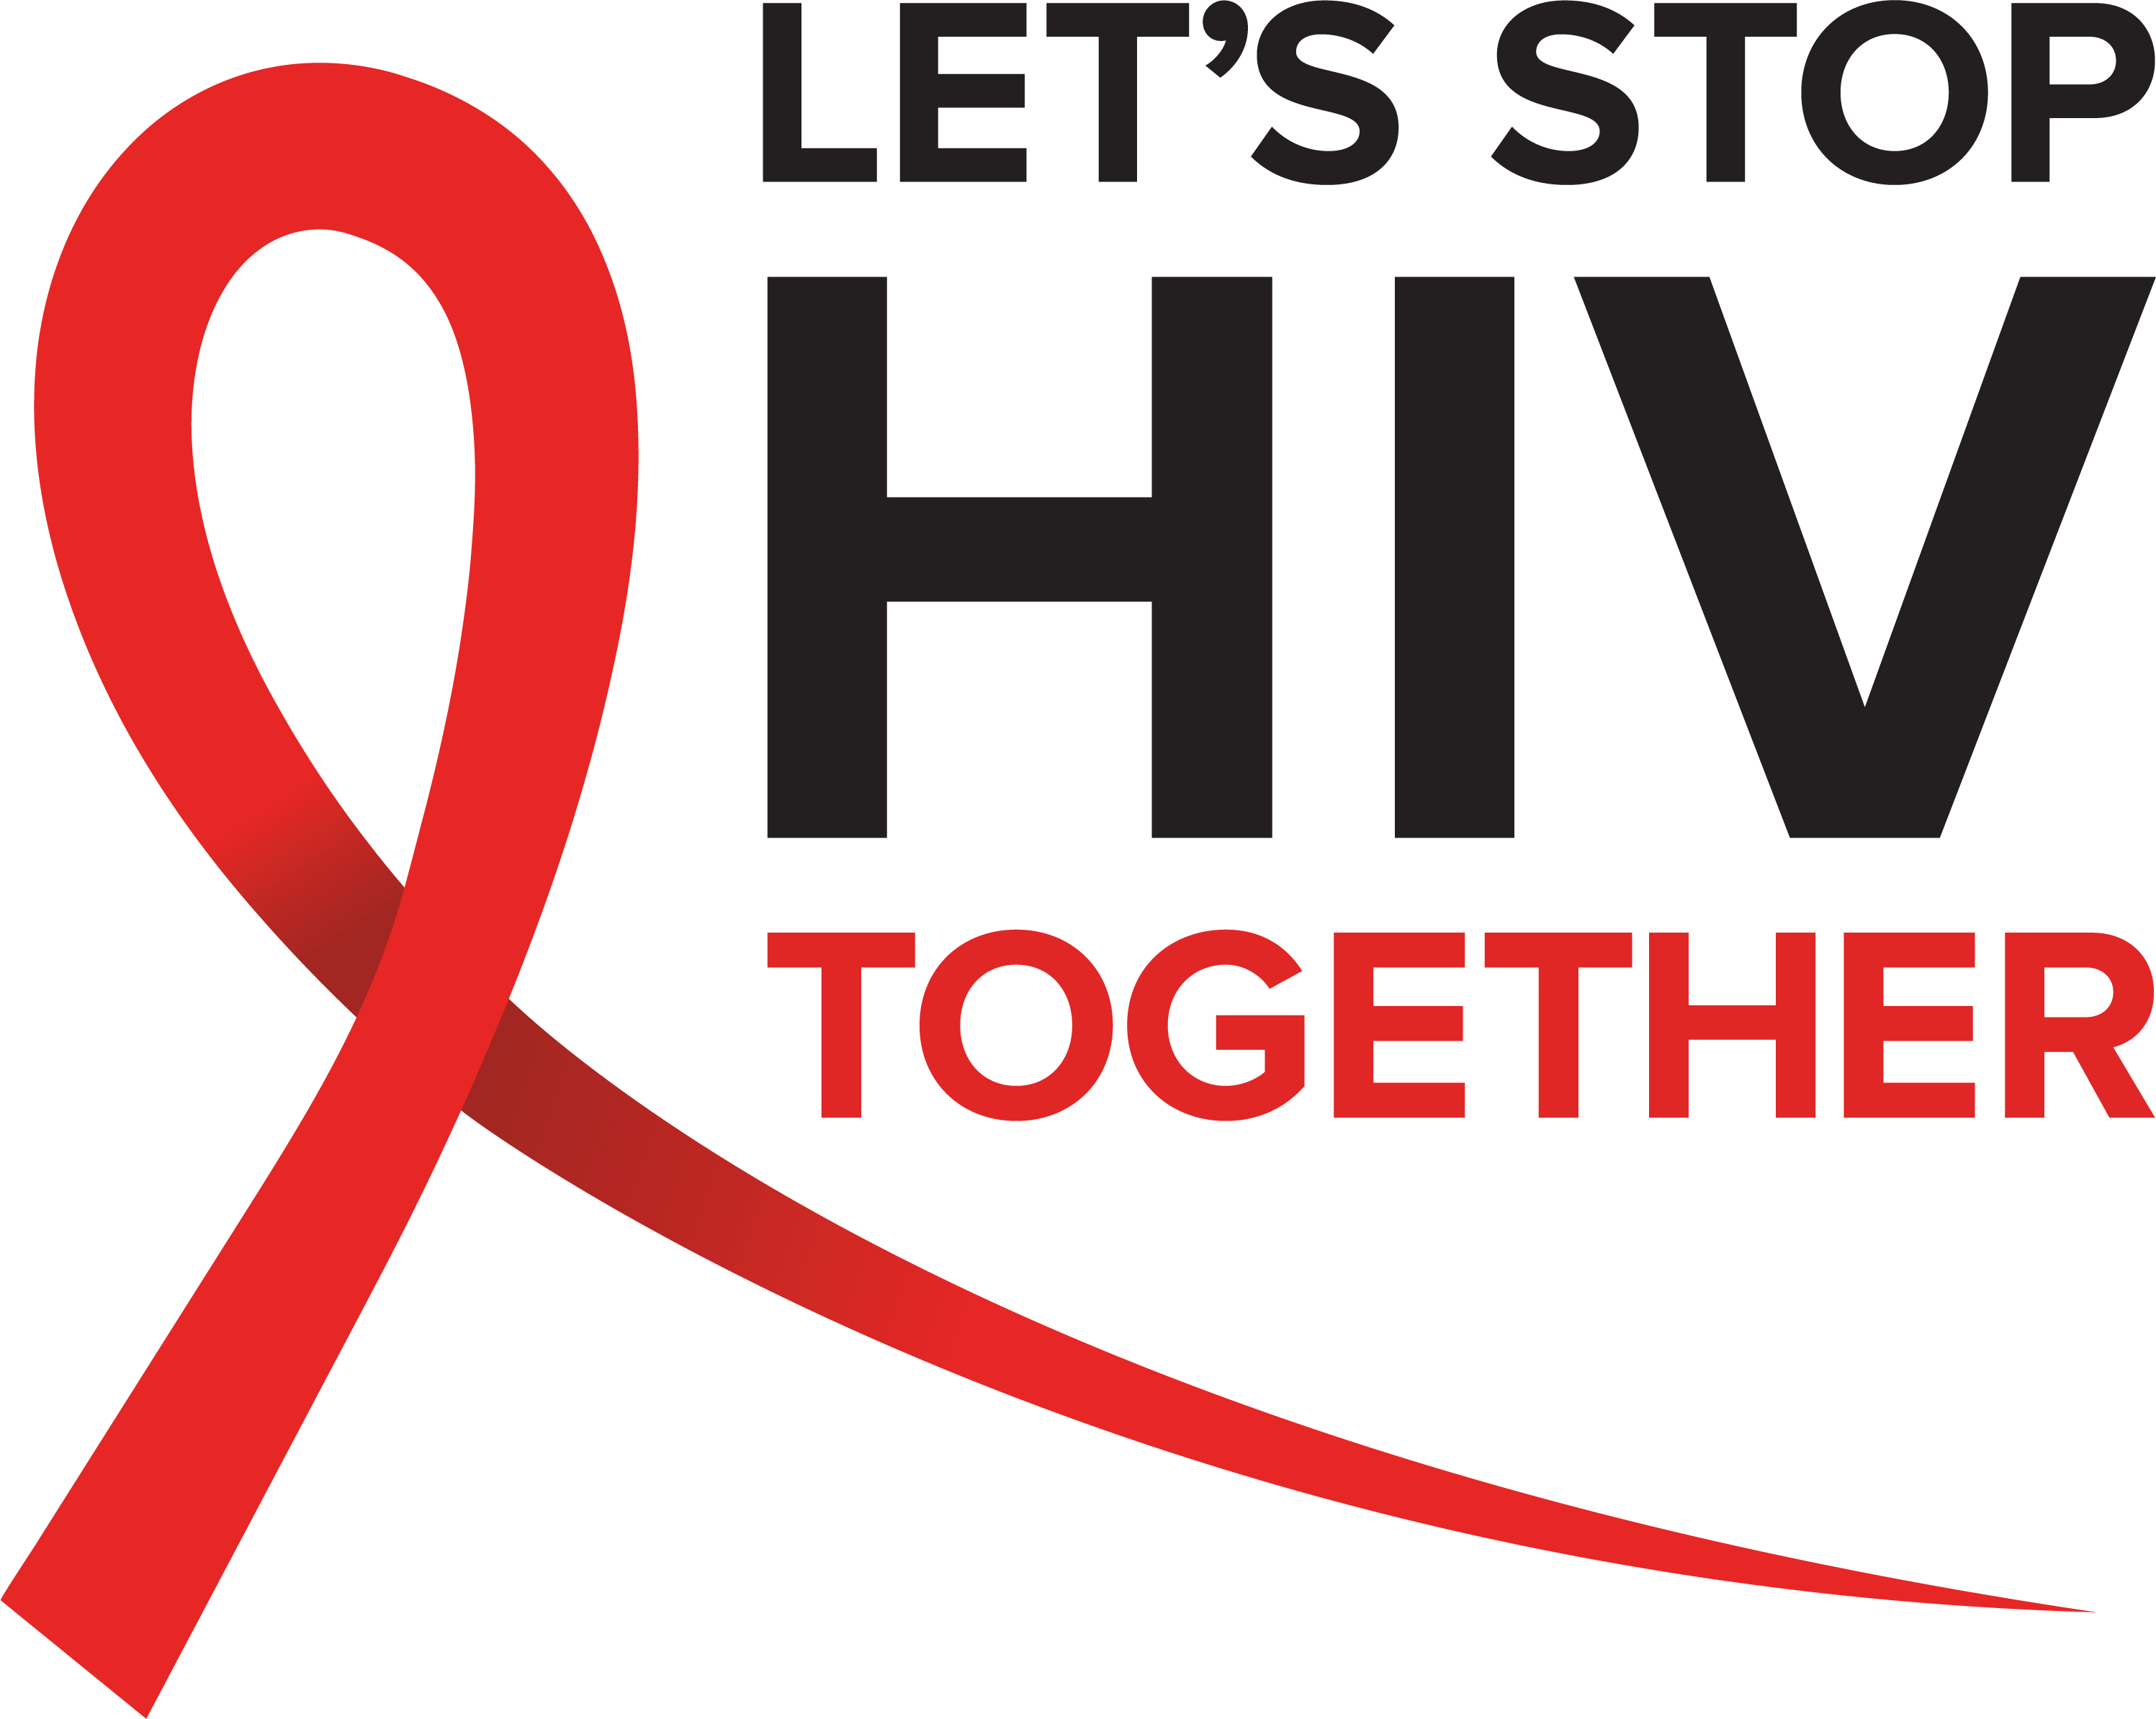 Logo for Let's Stop HIV Together